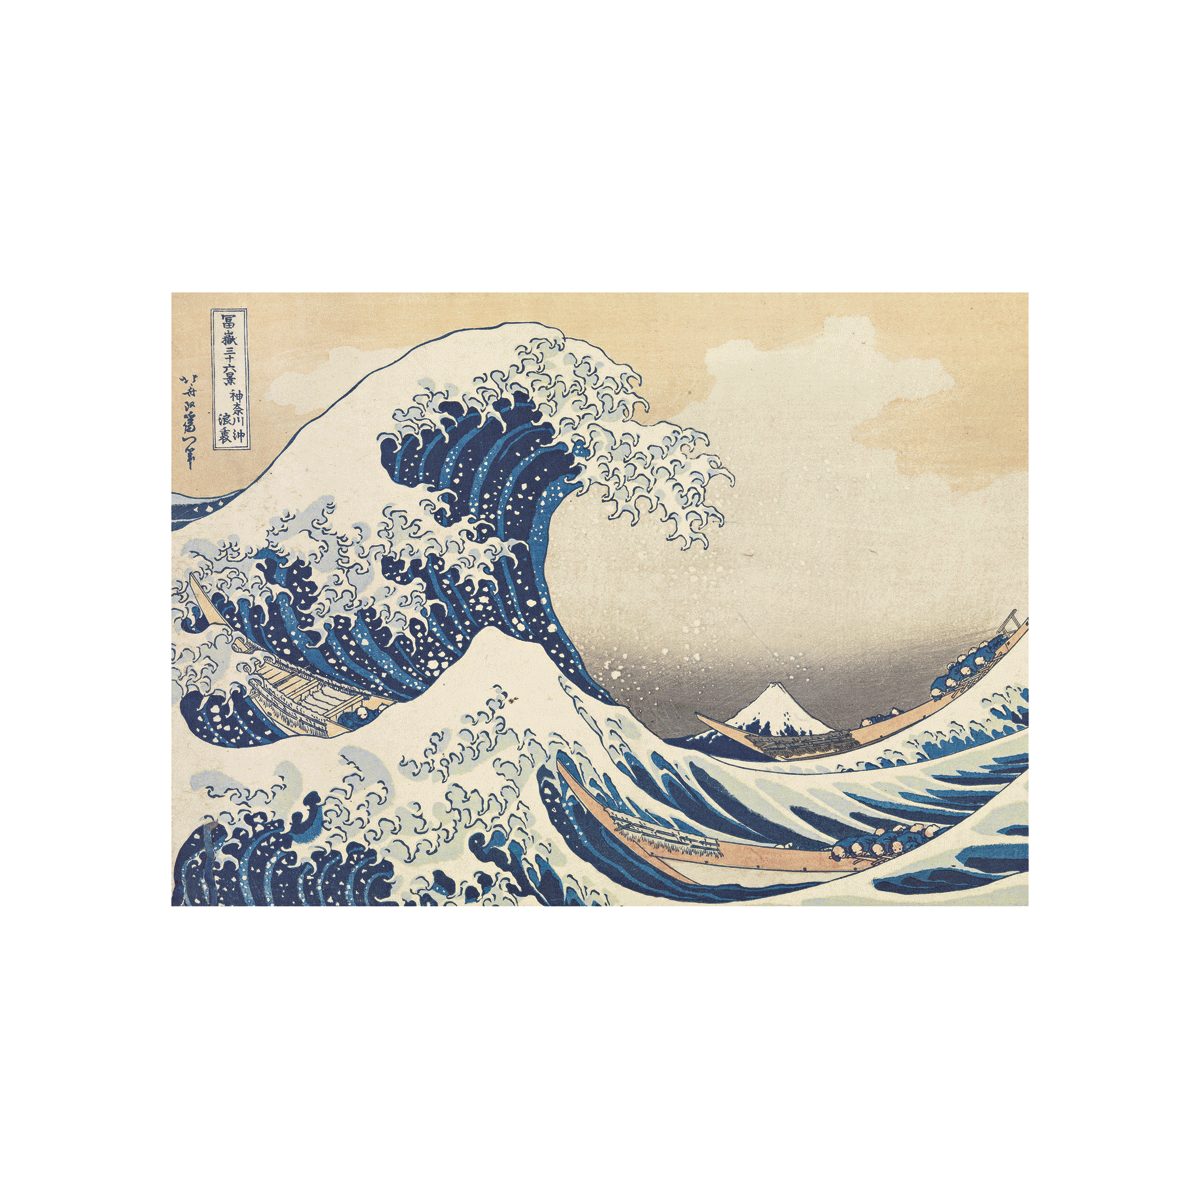 Clementoni puzzle museum collection - hokusai , "the great wave" - 1000 pezzi, puzzle adulti - CLEMENTONI